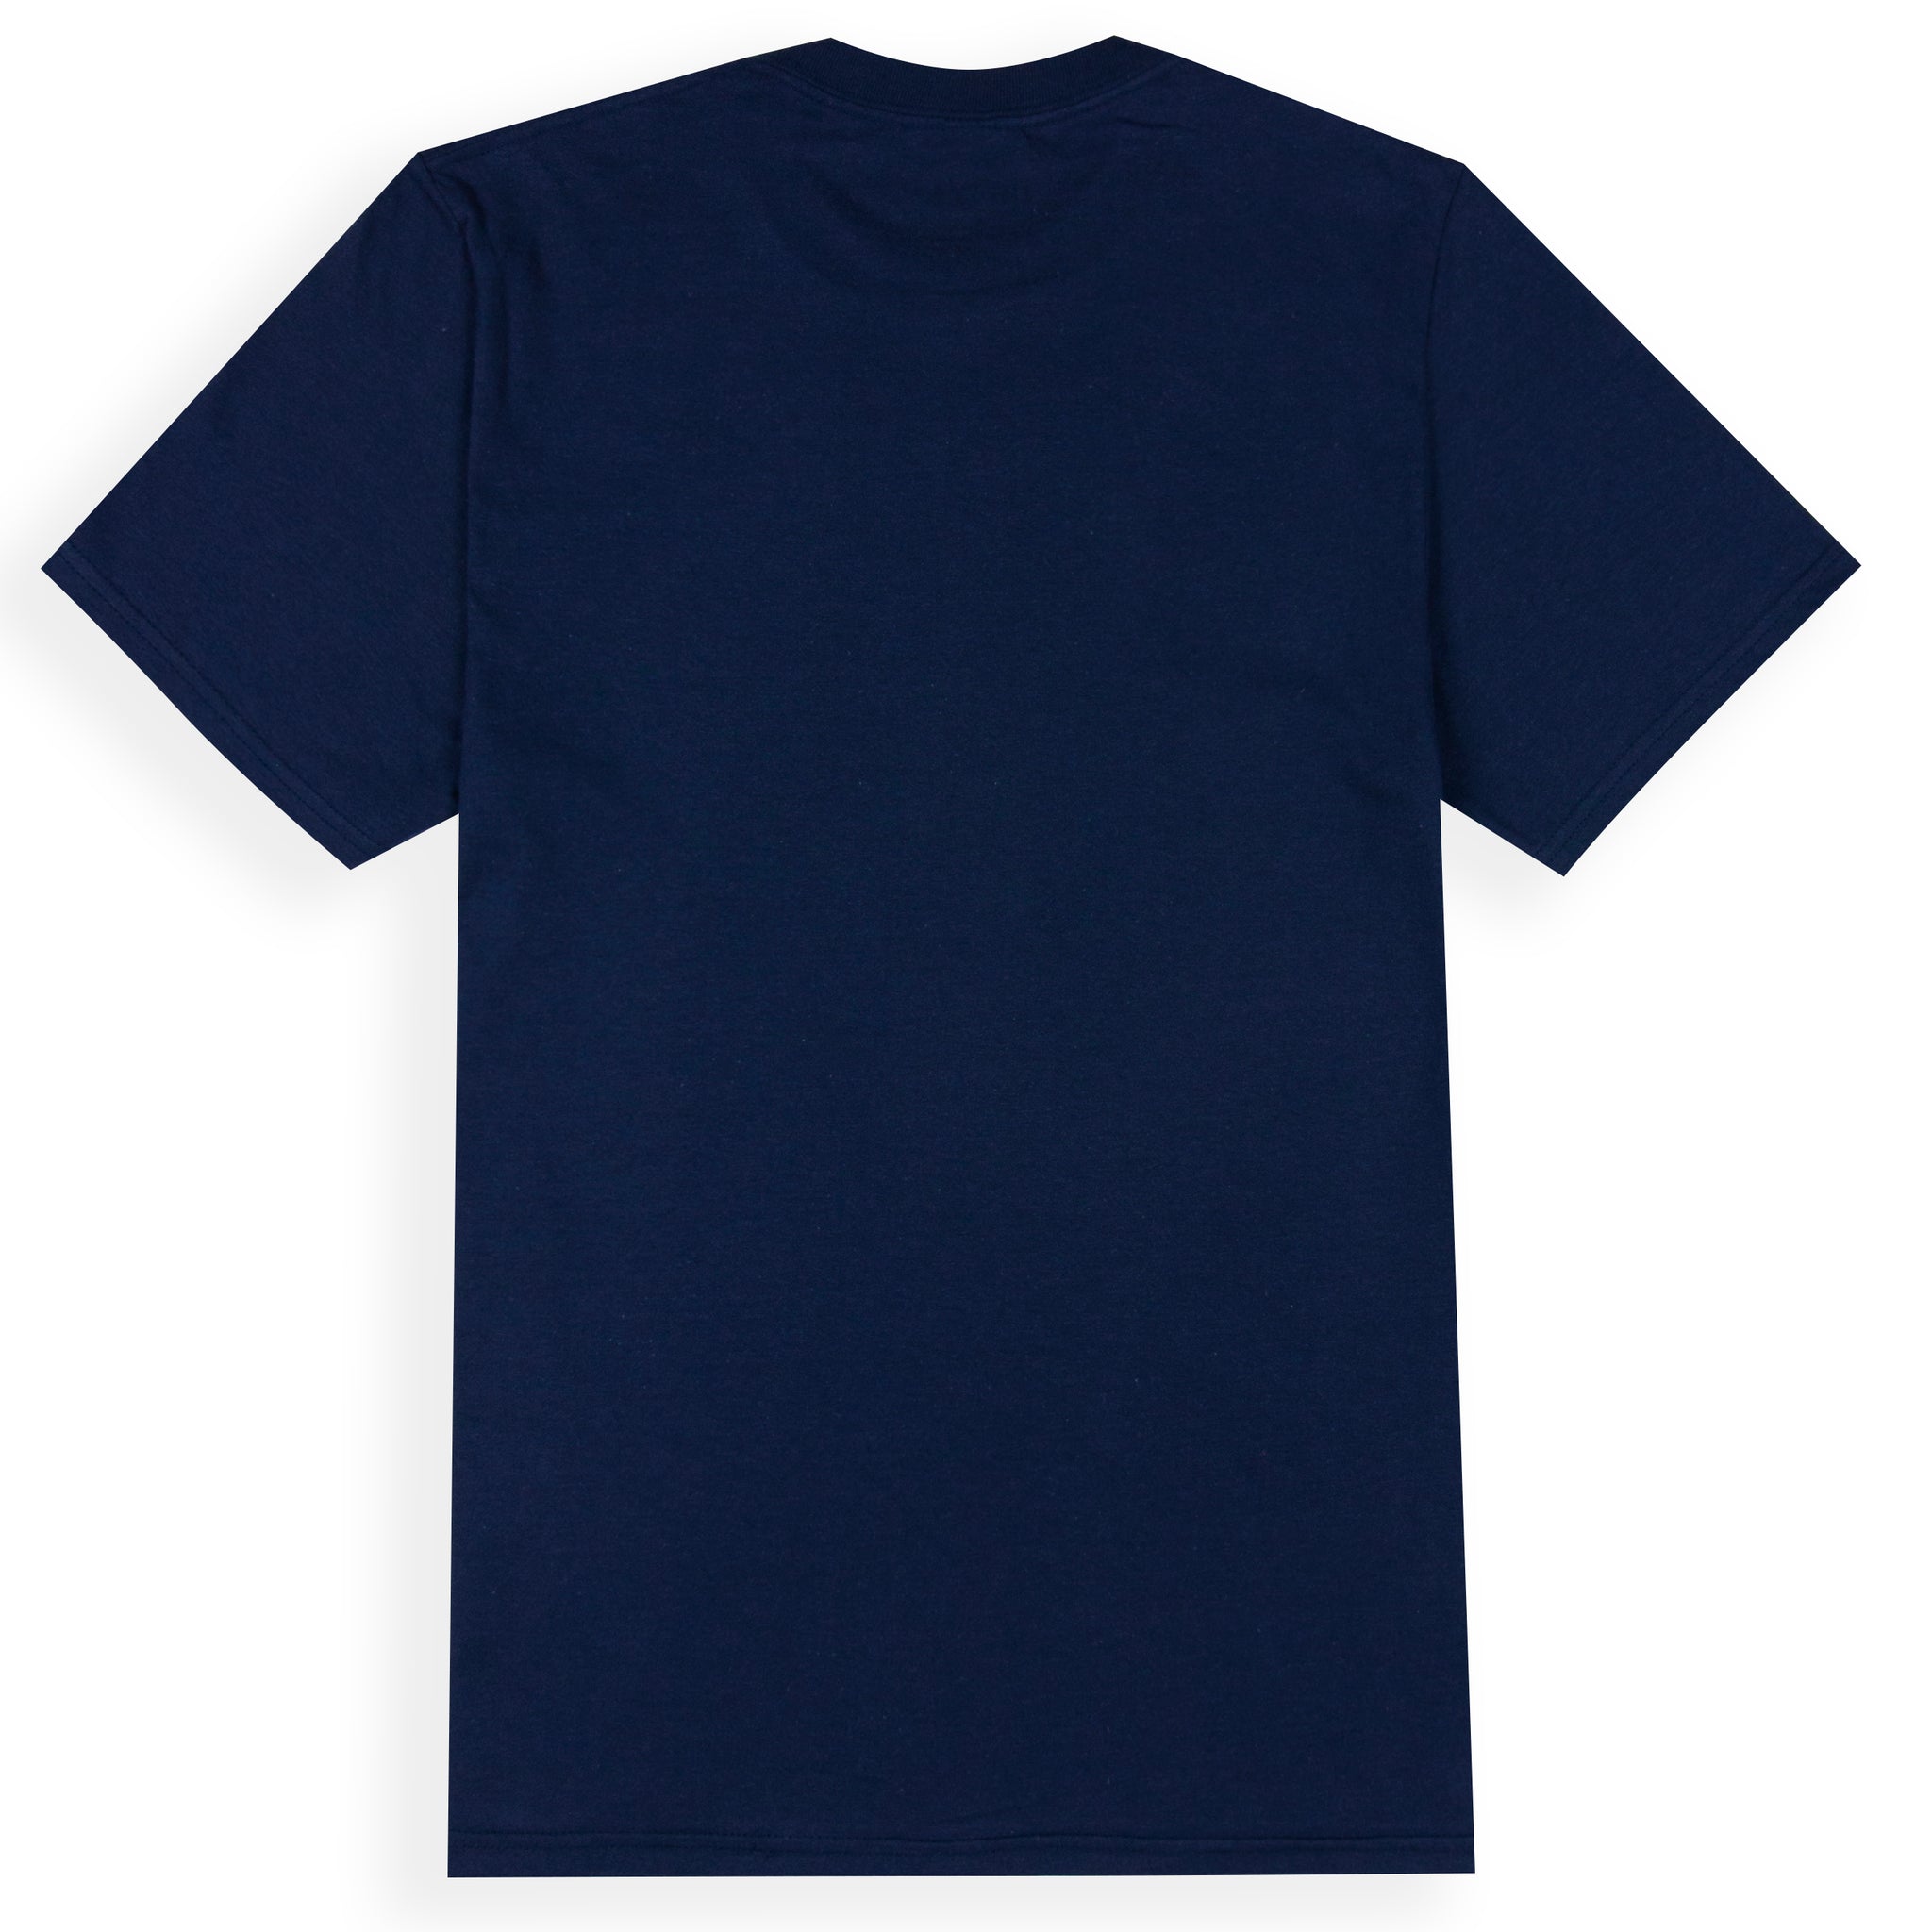 Outre webster navy blue short sleeve shirt